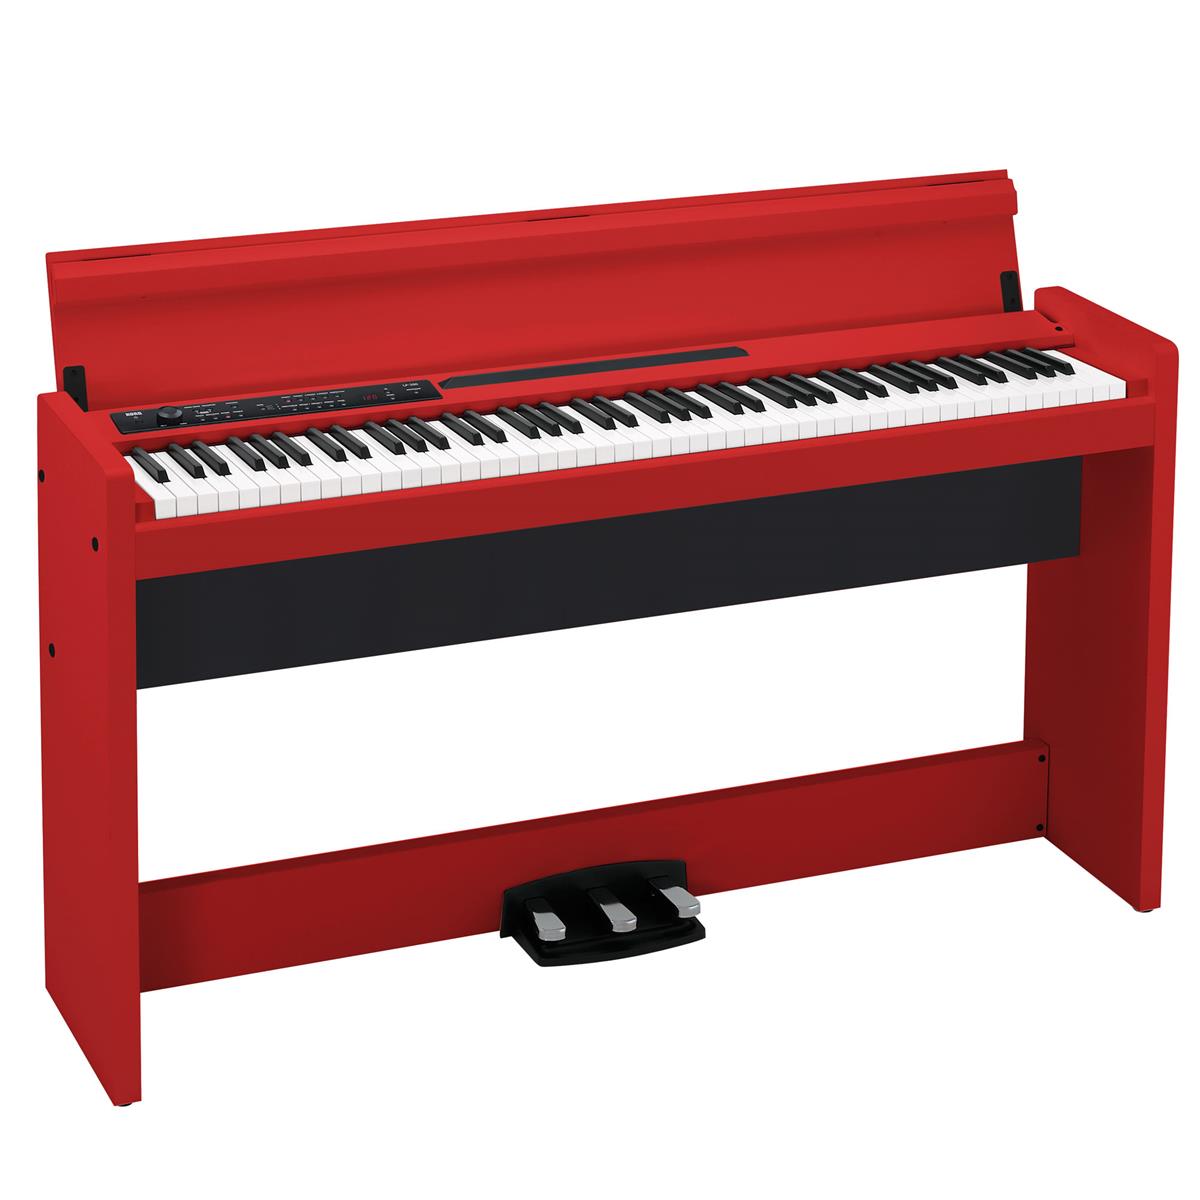 Korg LP-380 88-Keys Grand Digital Piano (LE Red) $799 + free s/h